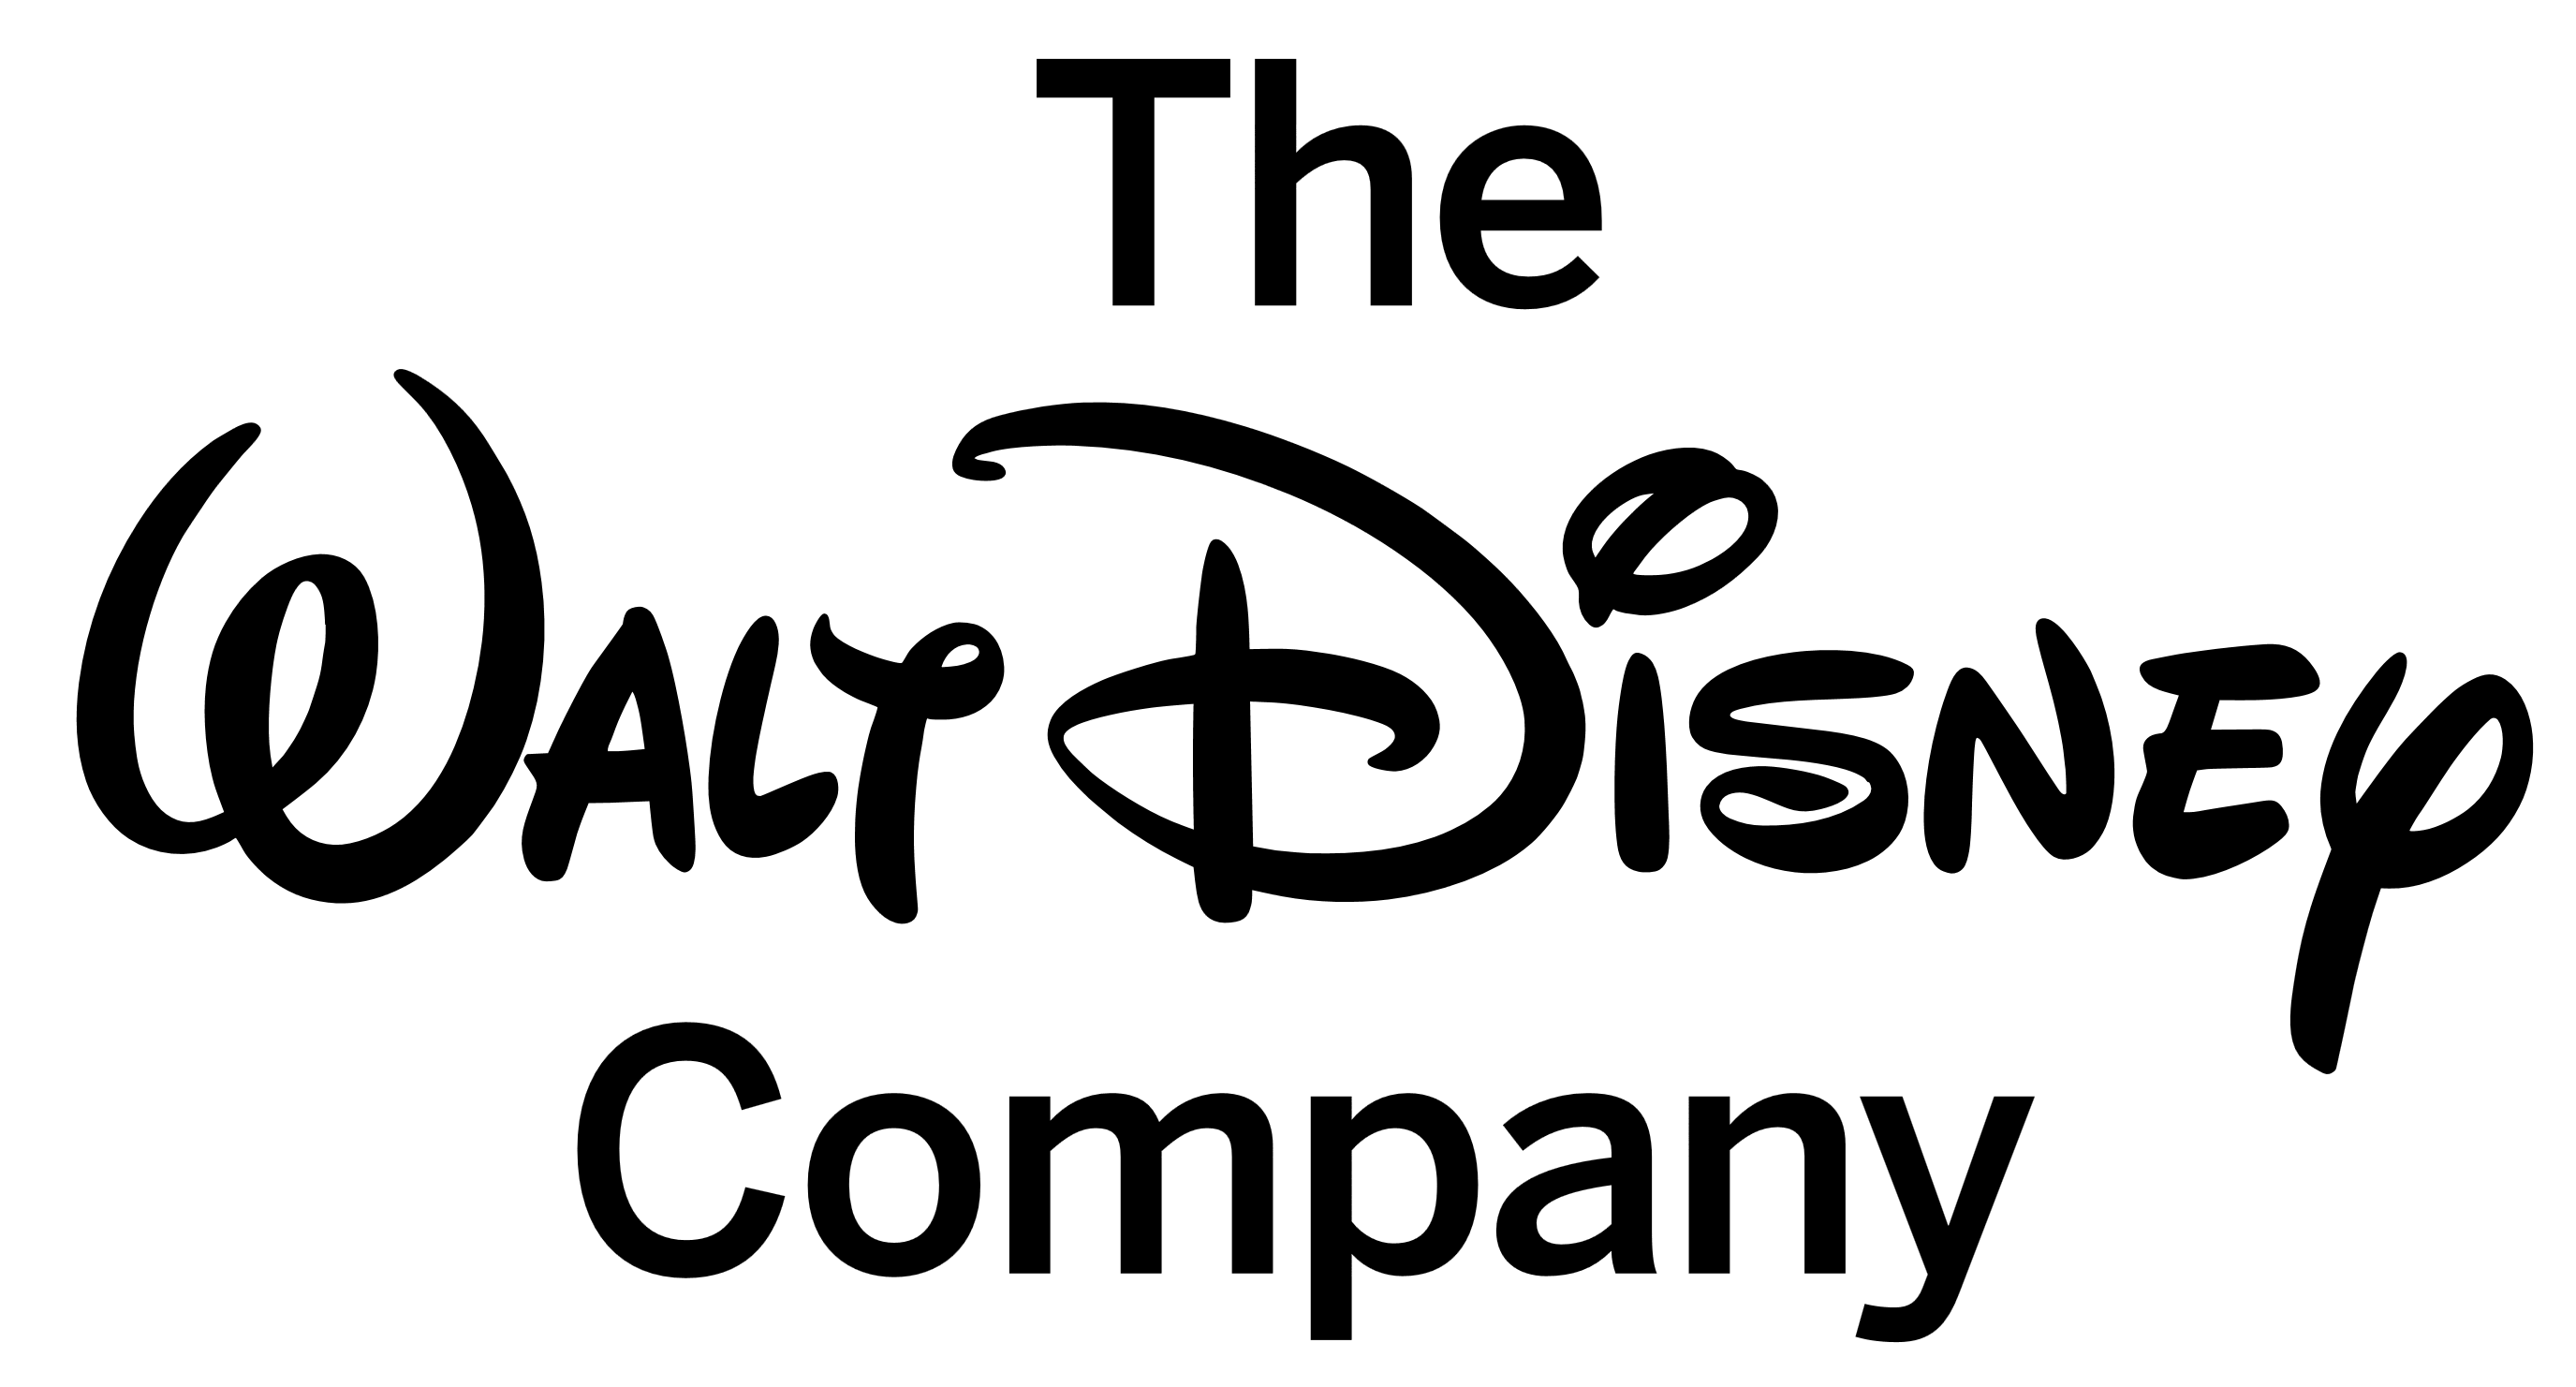 The walt disney company logo